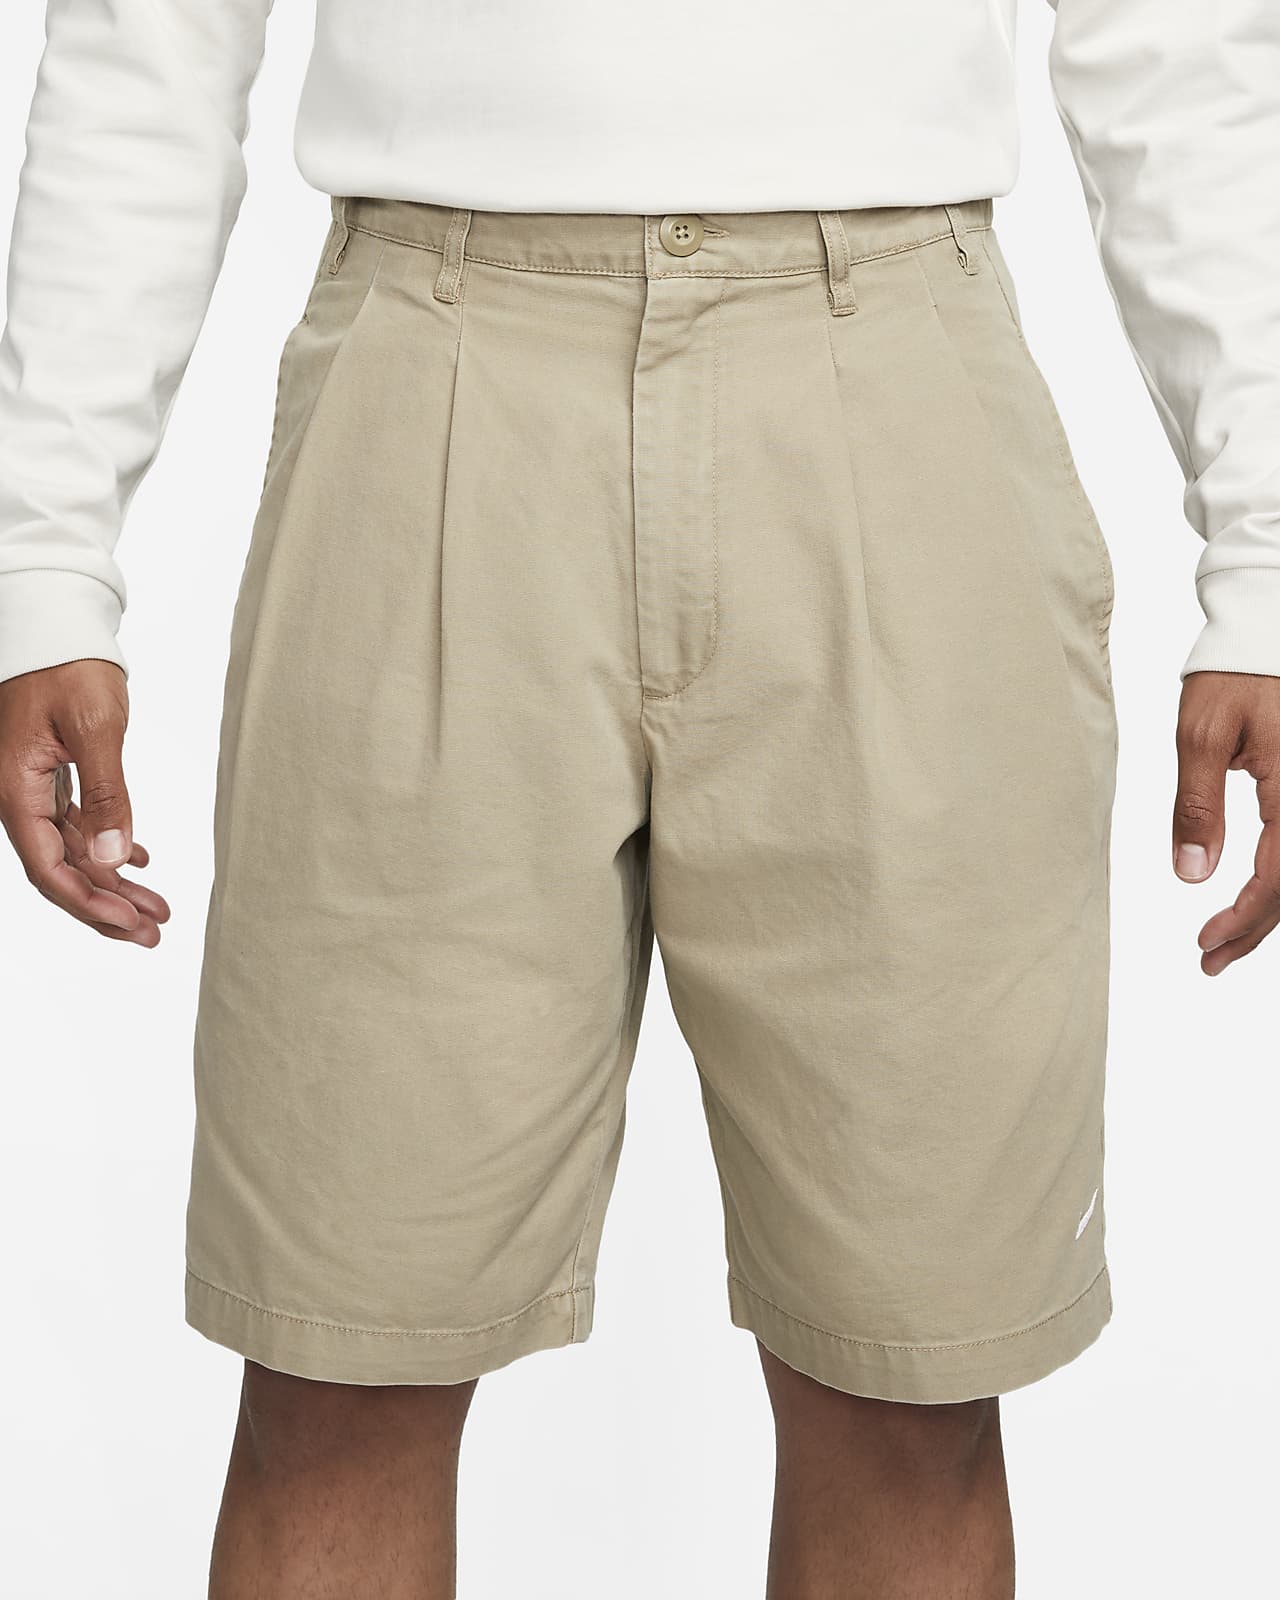 Nike Life Men's Pleated Chino Shorts.